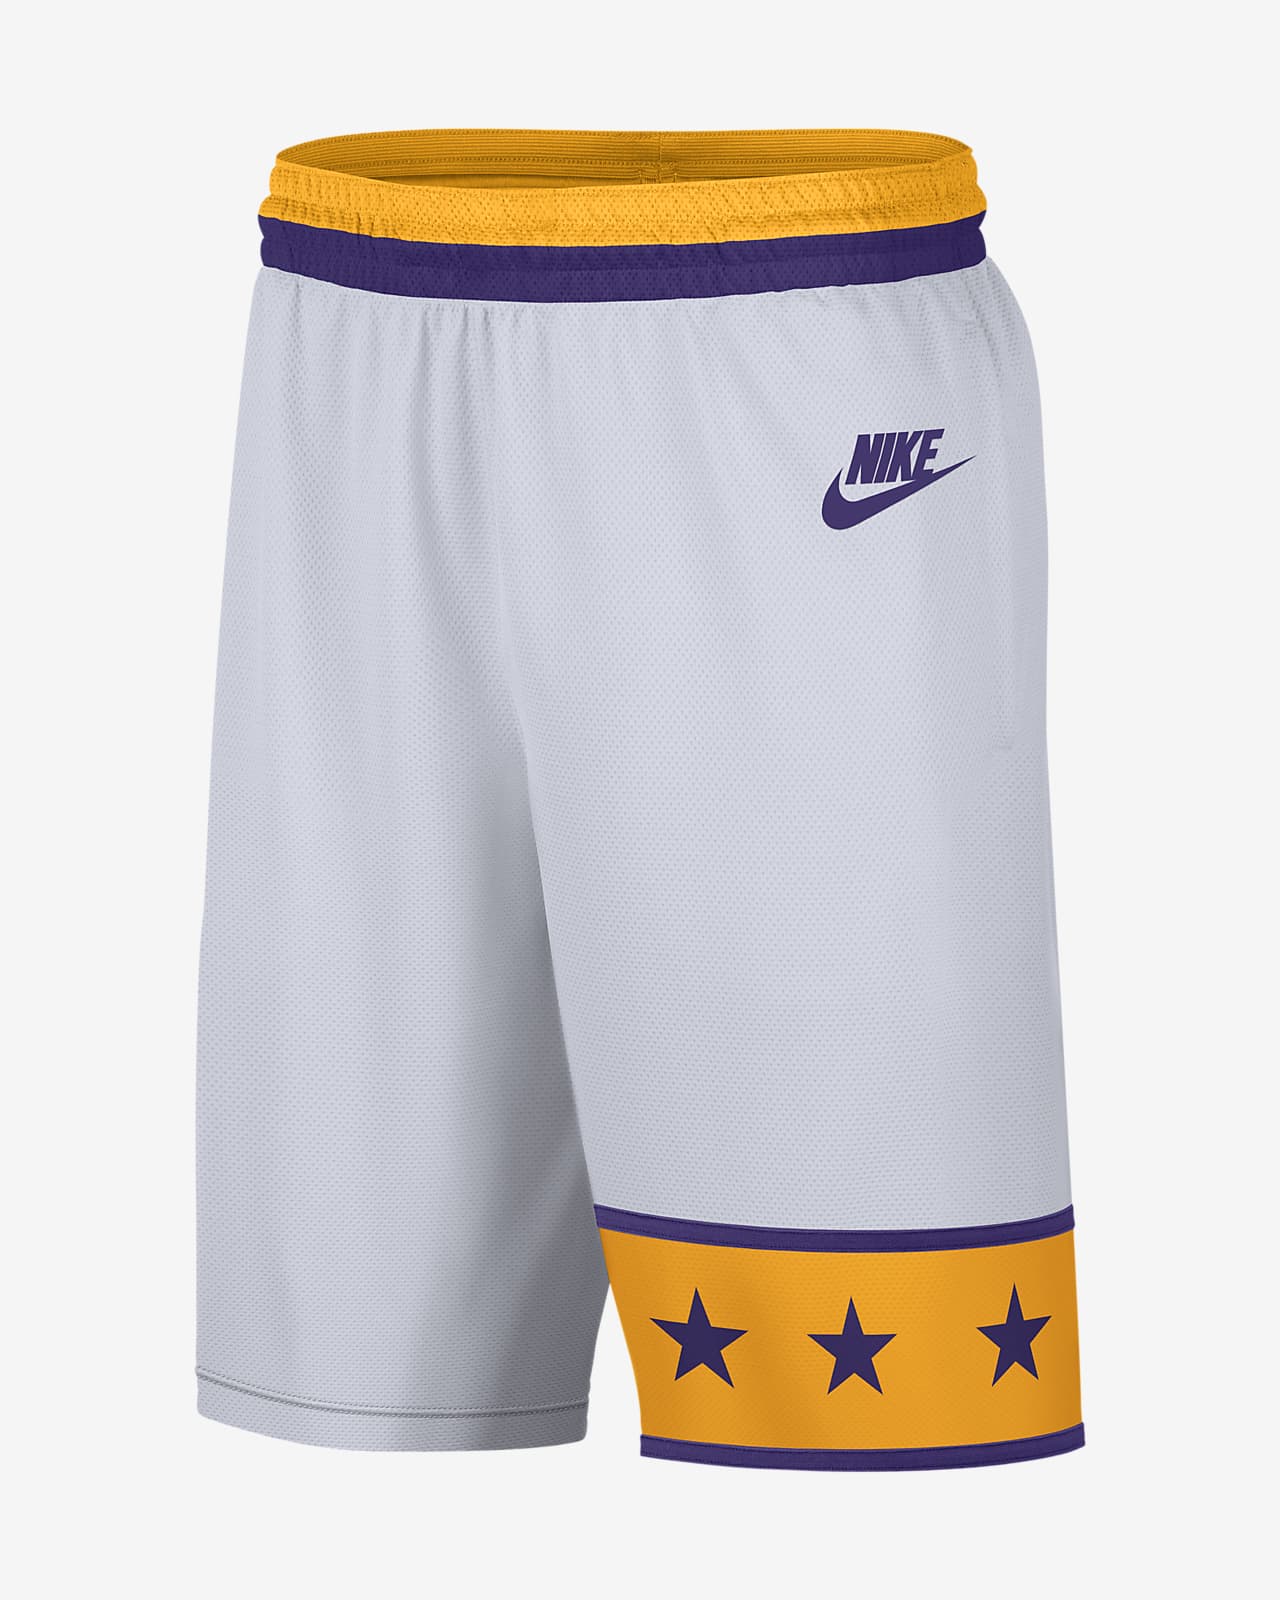 Nike College (LSU) Men's Replica Basketball Shorts